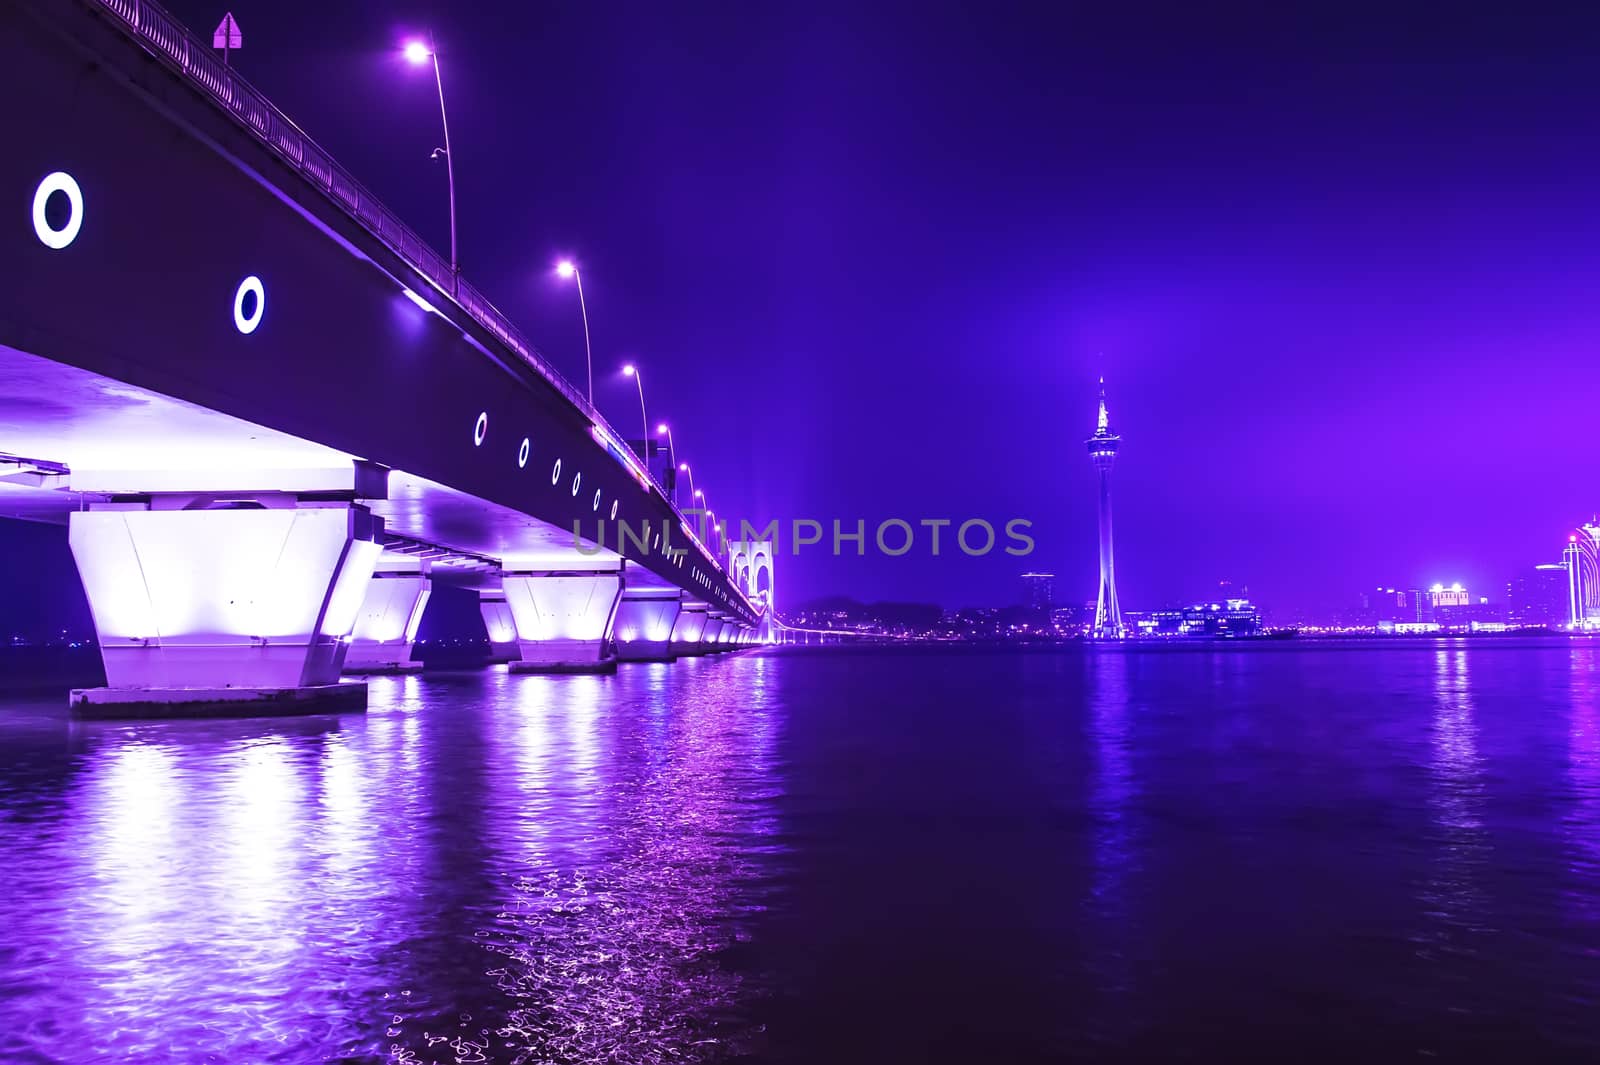 Macau Tower and Sai Van Bridge at Night. by GNNick